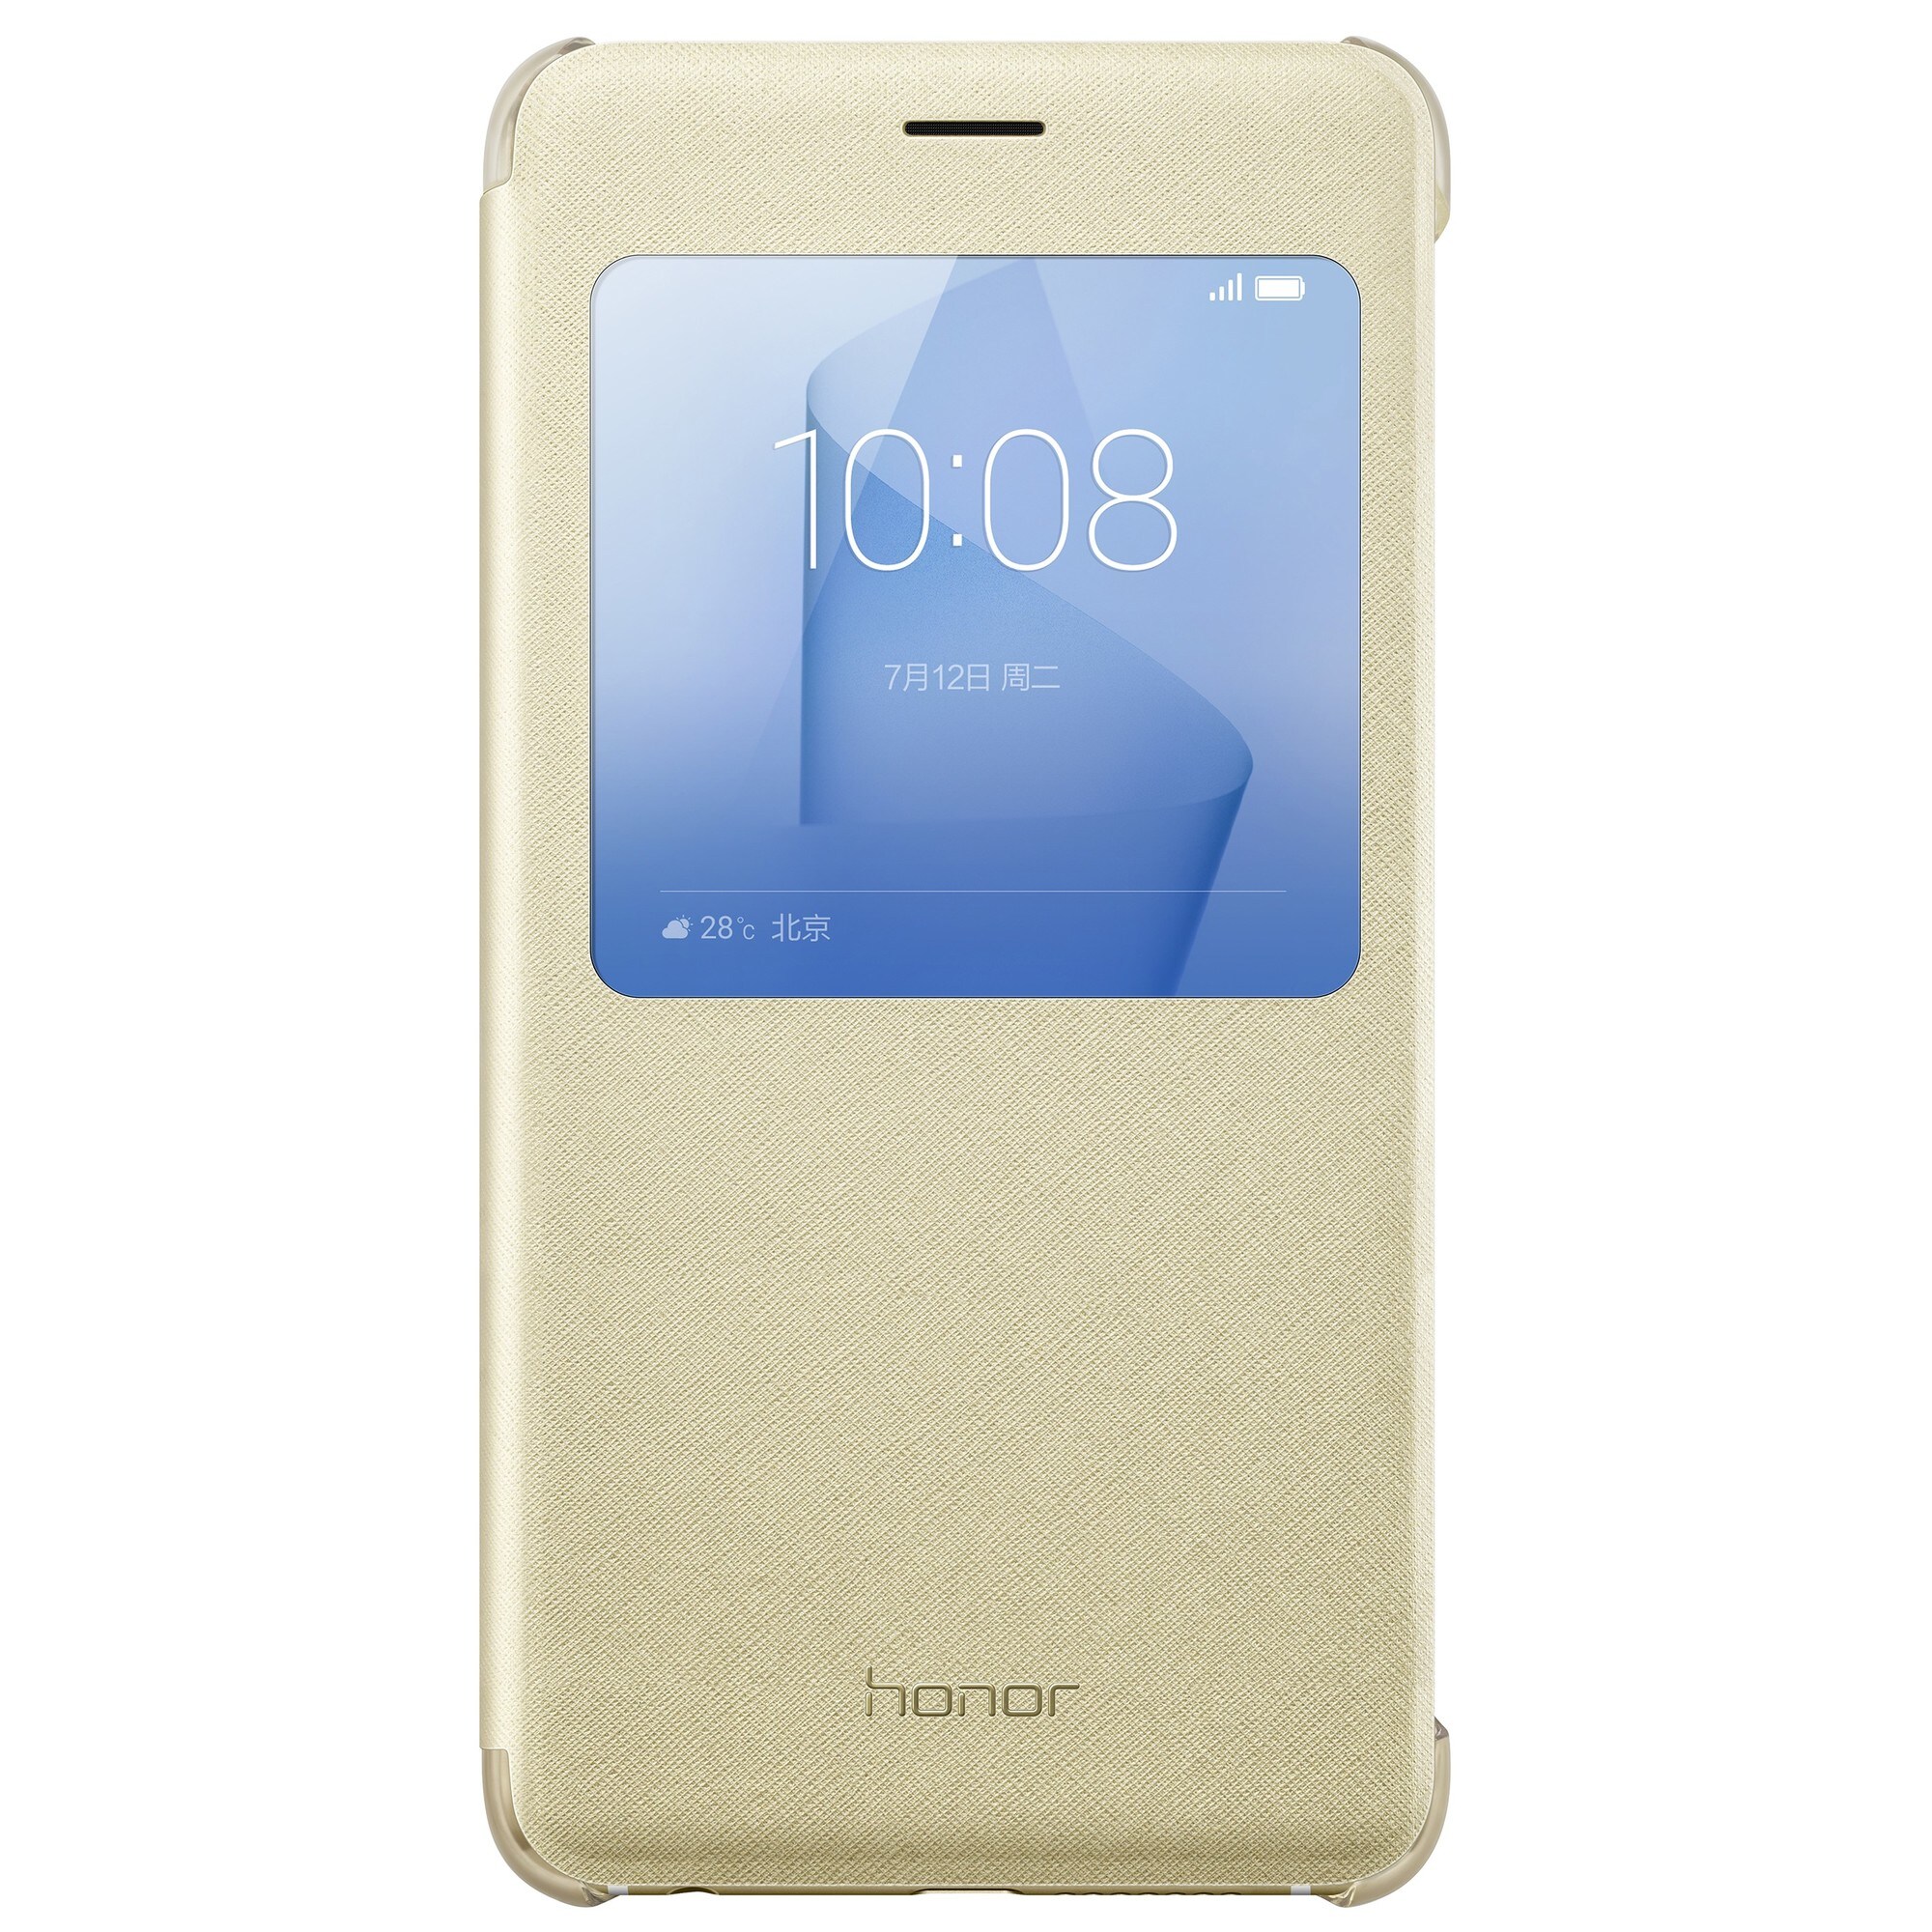 Huawei view fodral för Honor 8 (guld) - Elgiganten